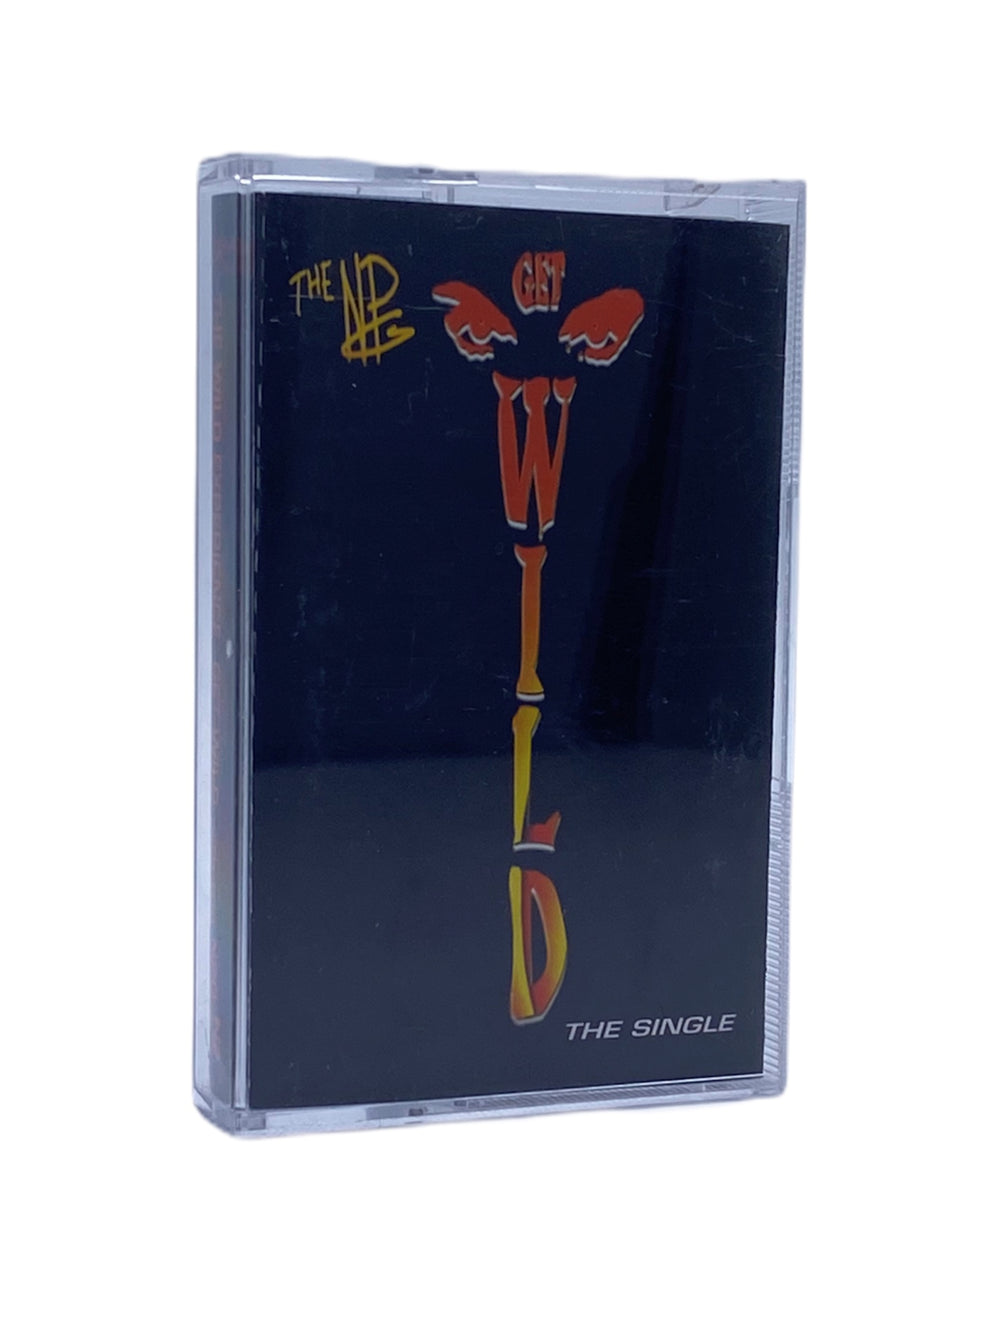 Prince – The NPG GET WILD 1994 Original Cassette Tape Single Cassingle